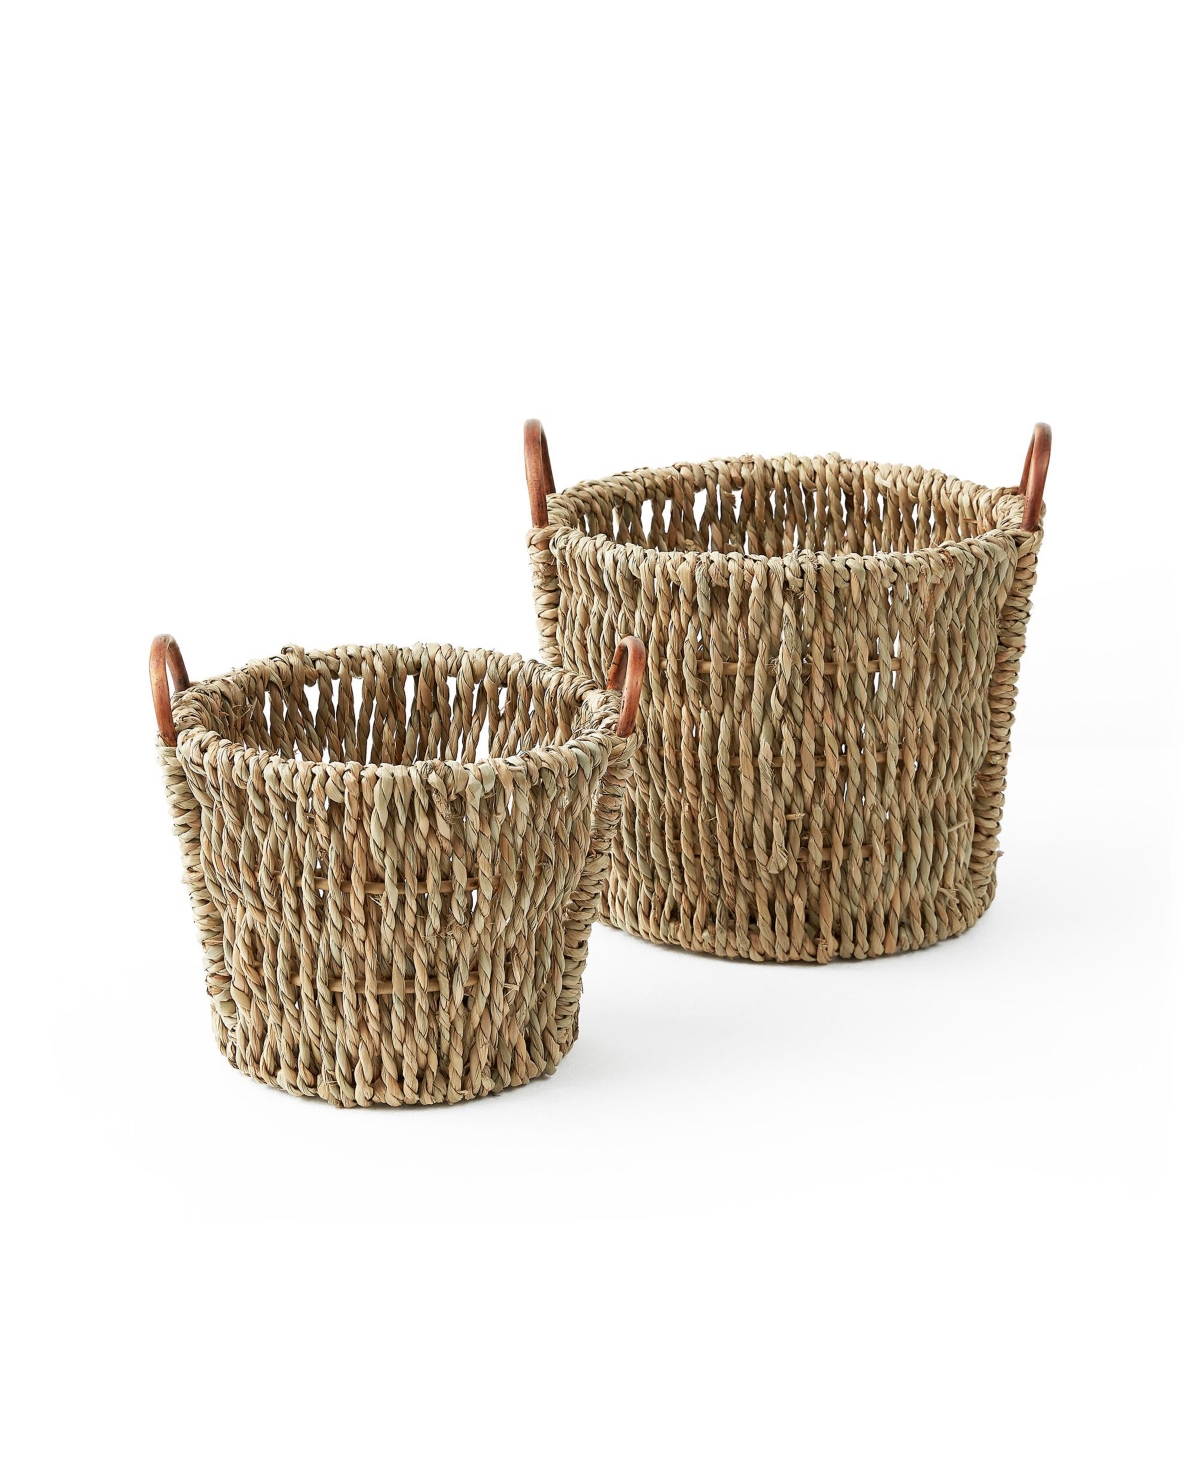 2 Piece Chunk Sea Grass Baskets with Rattan Ear Handles - Natural